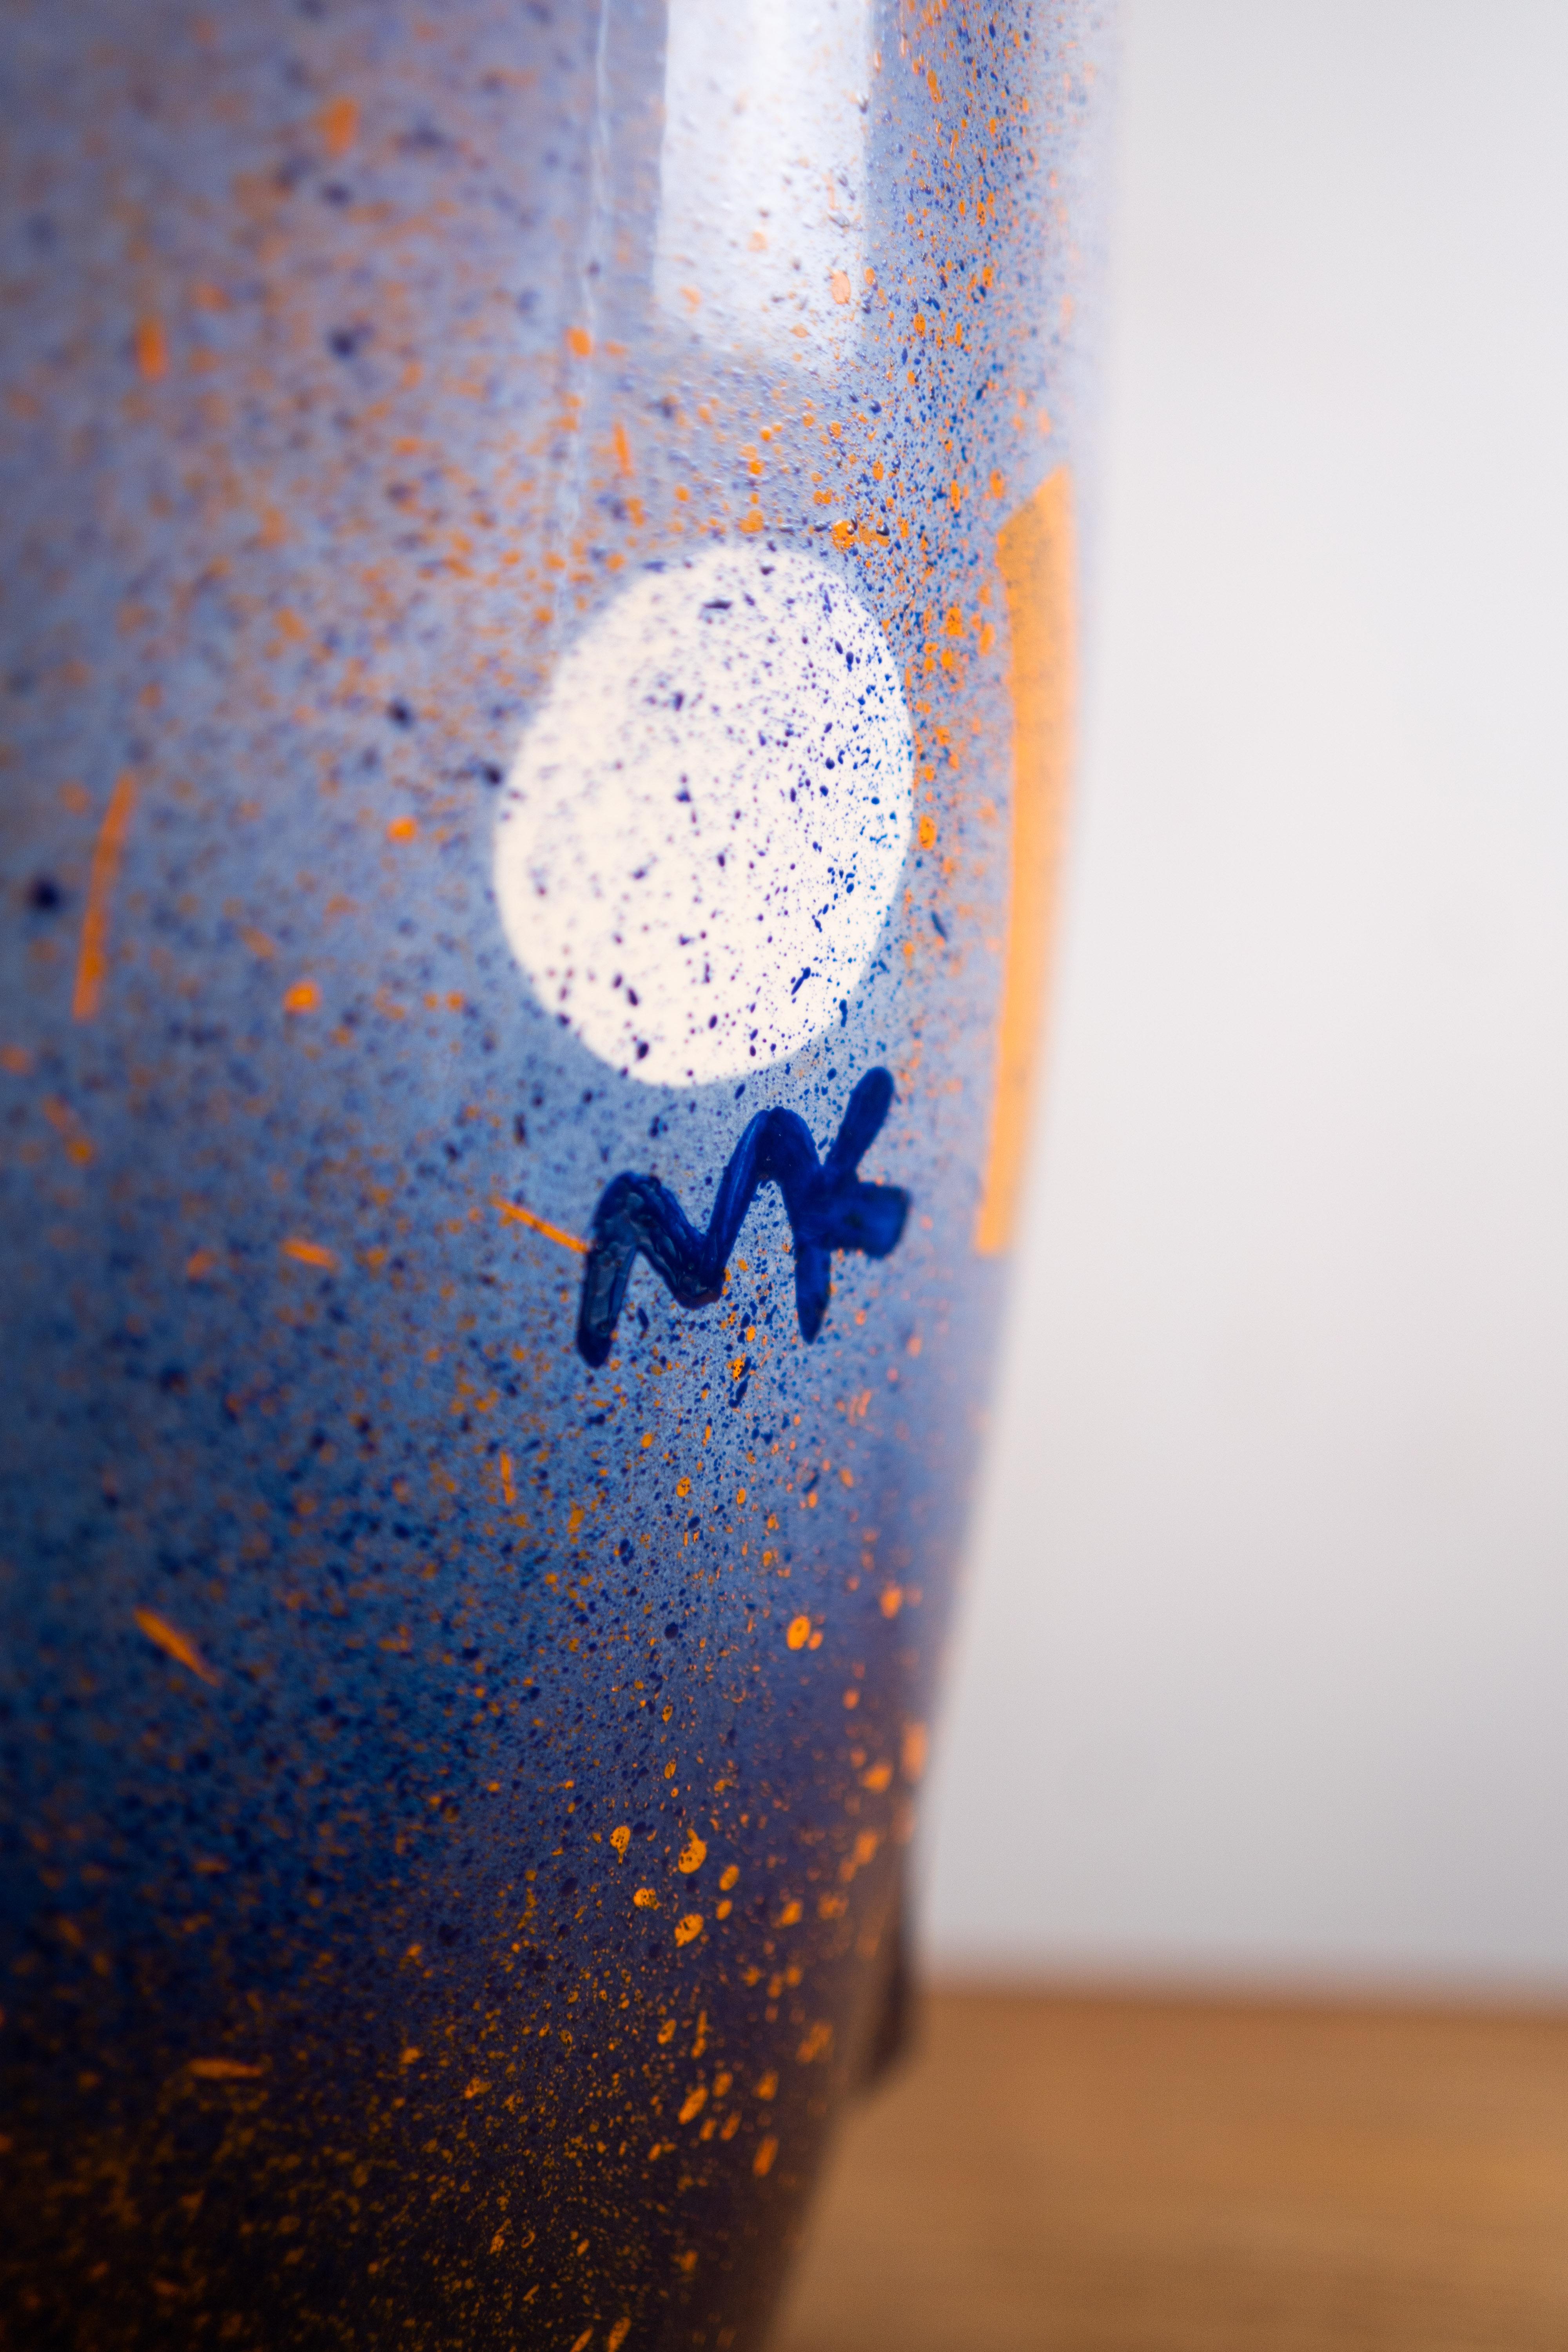 Ceramic vase by Malwina Konopacka, polish designer.
Blue and yellow vase with a effect of confetti
handmade.